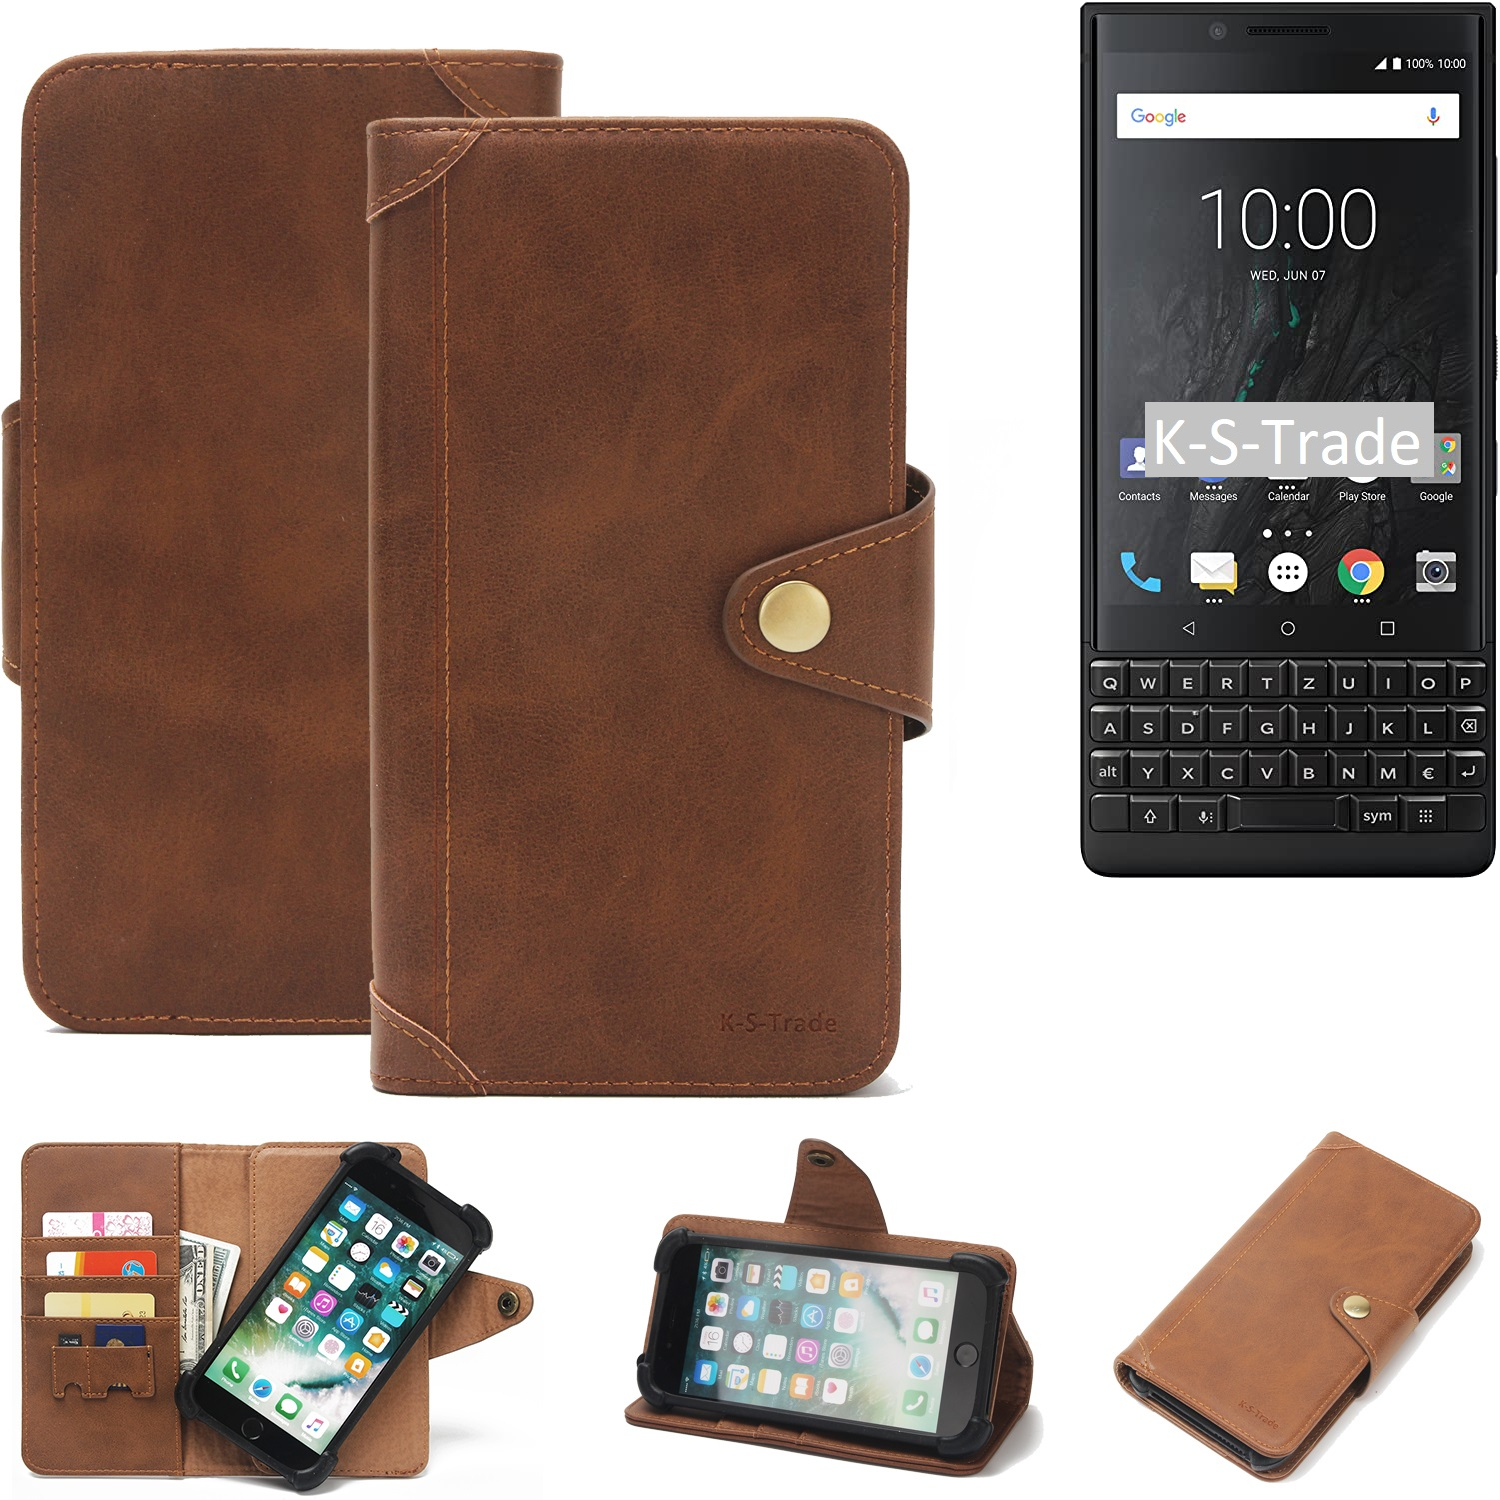 KEY2, Bookcover, K-S-TRADE Blackberry, Schutzhülle, braun